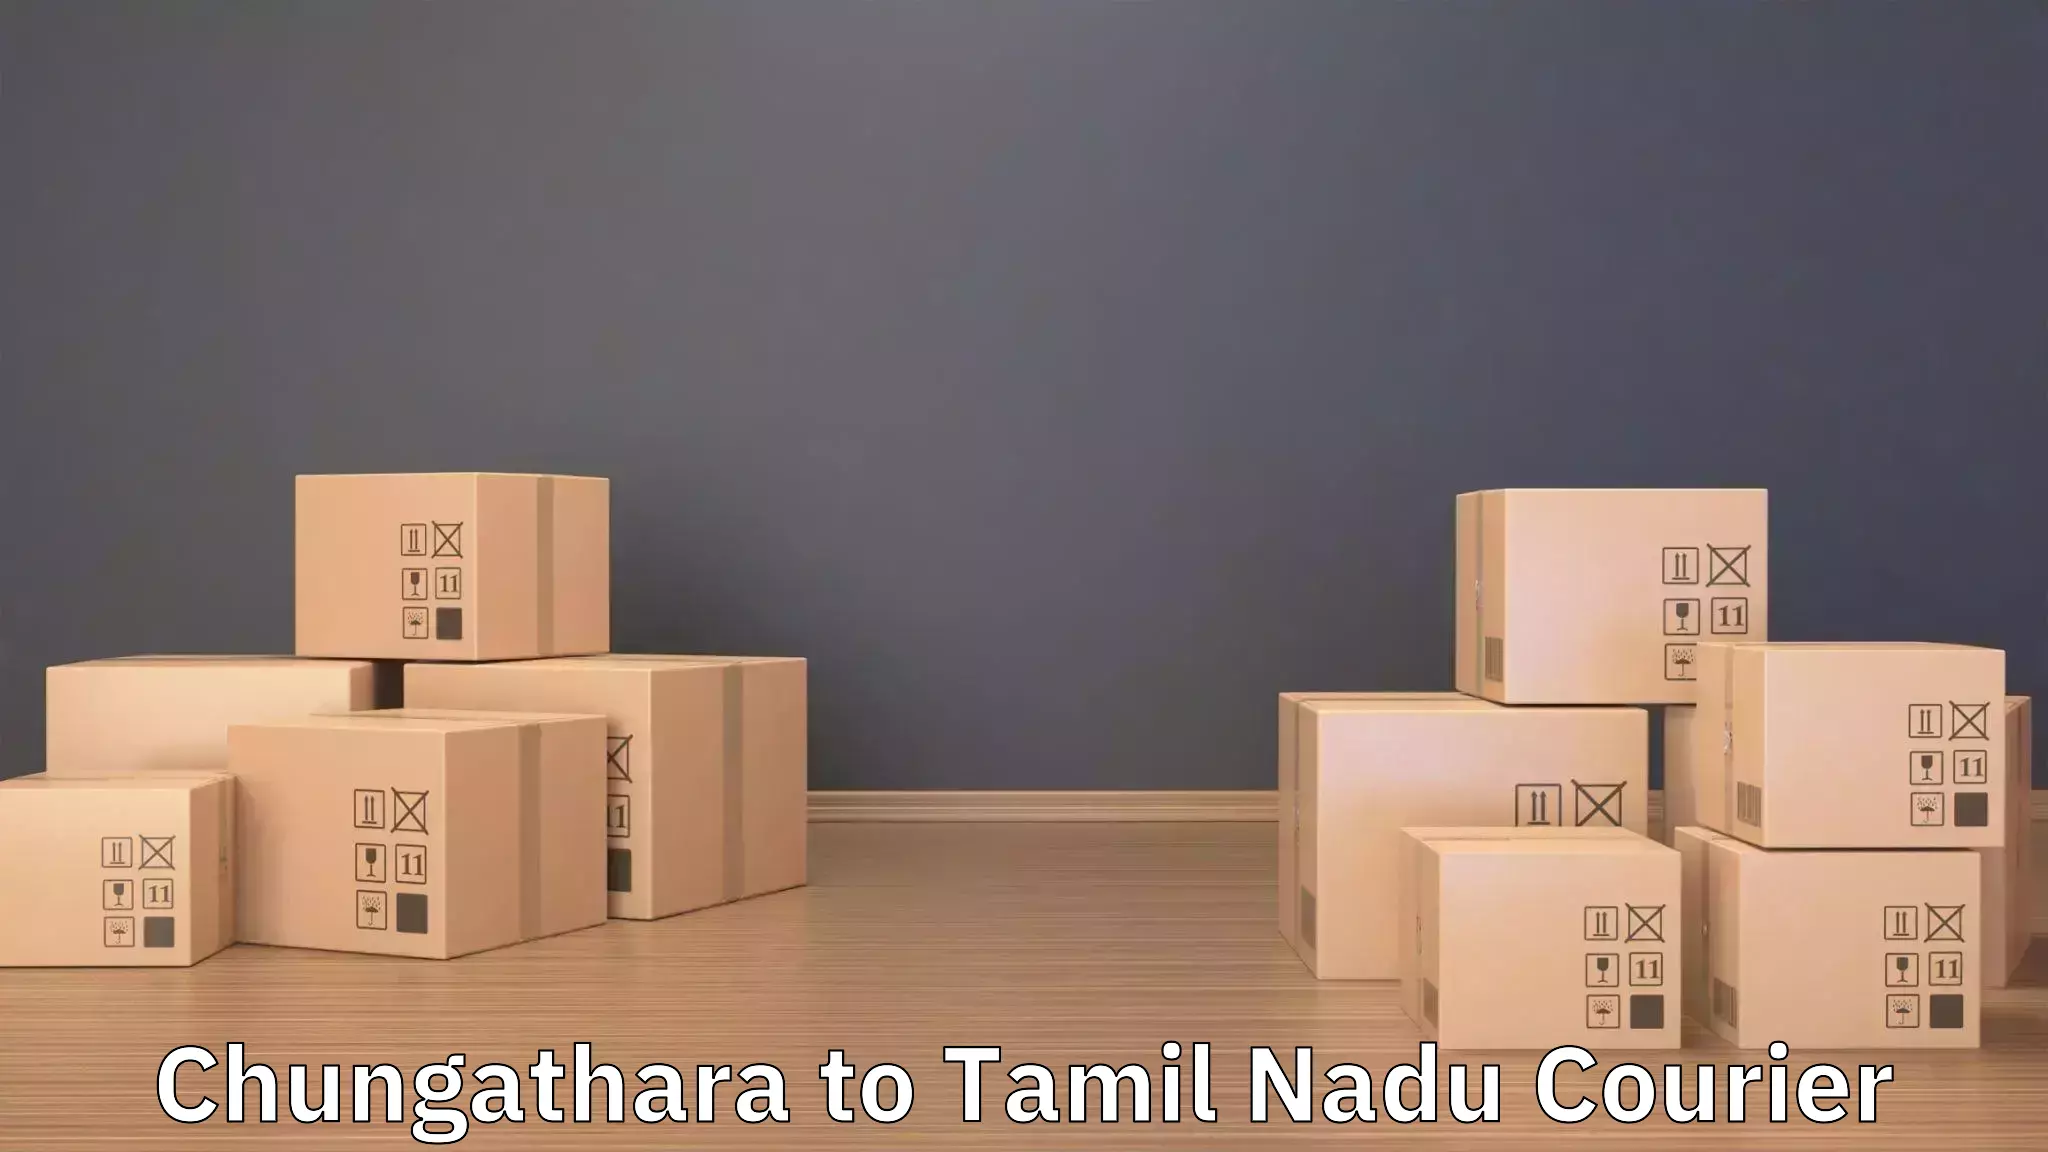 Efficient moving company Chungathara to Tamil Nadu